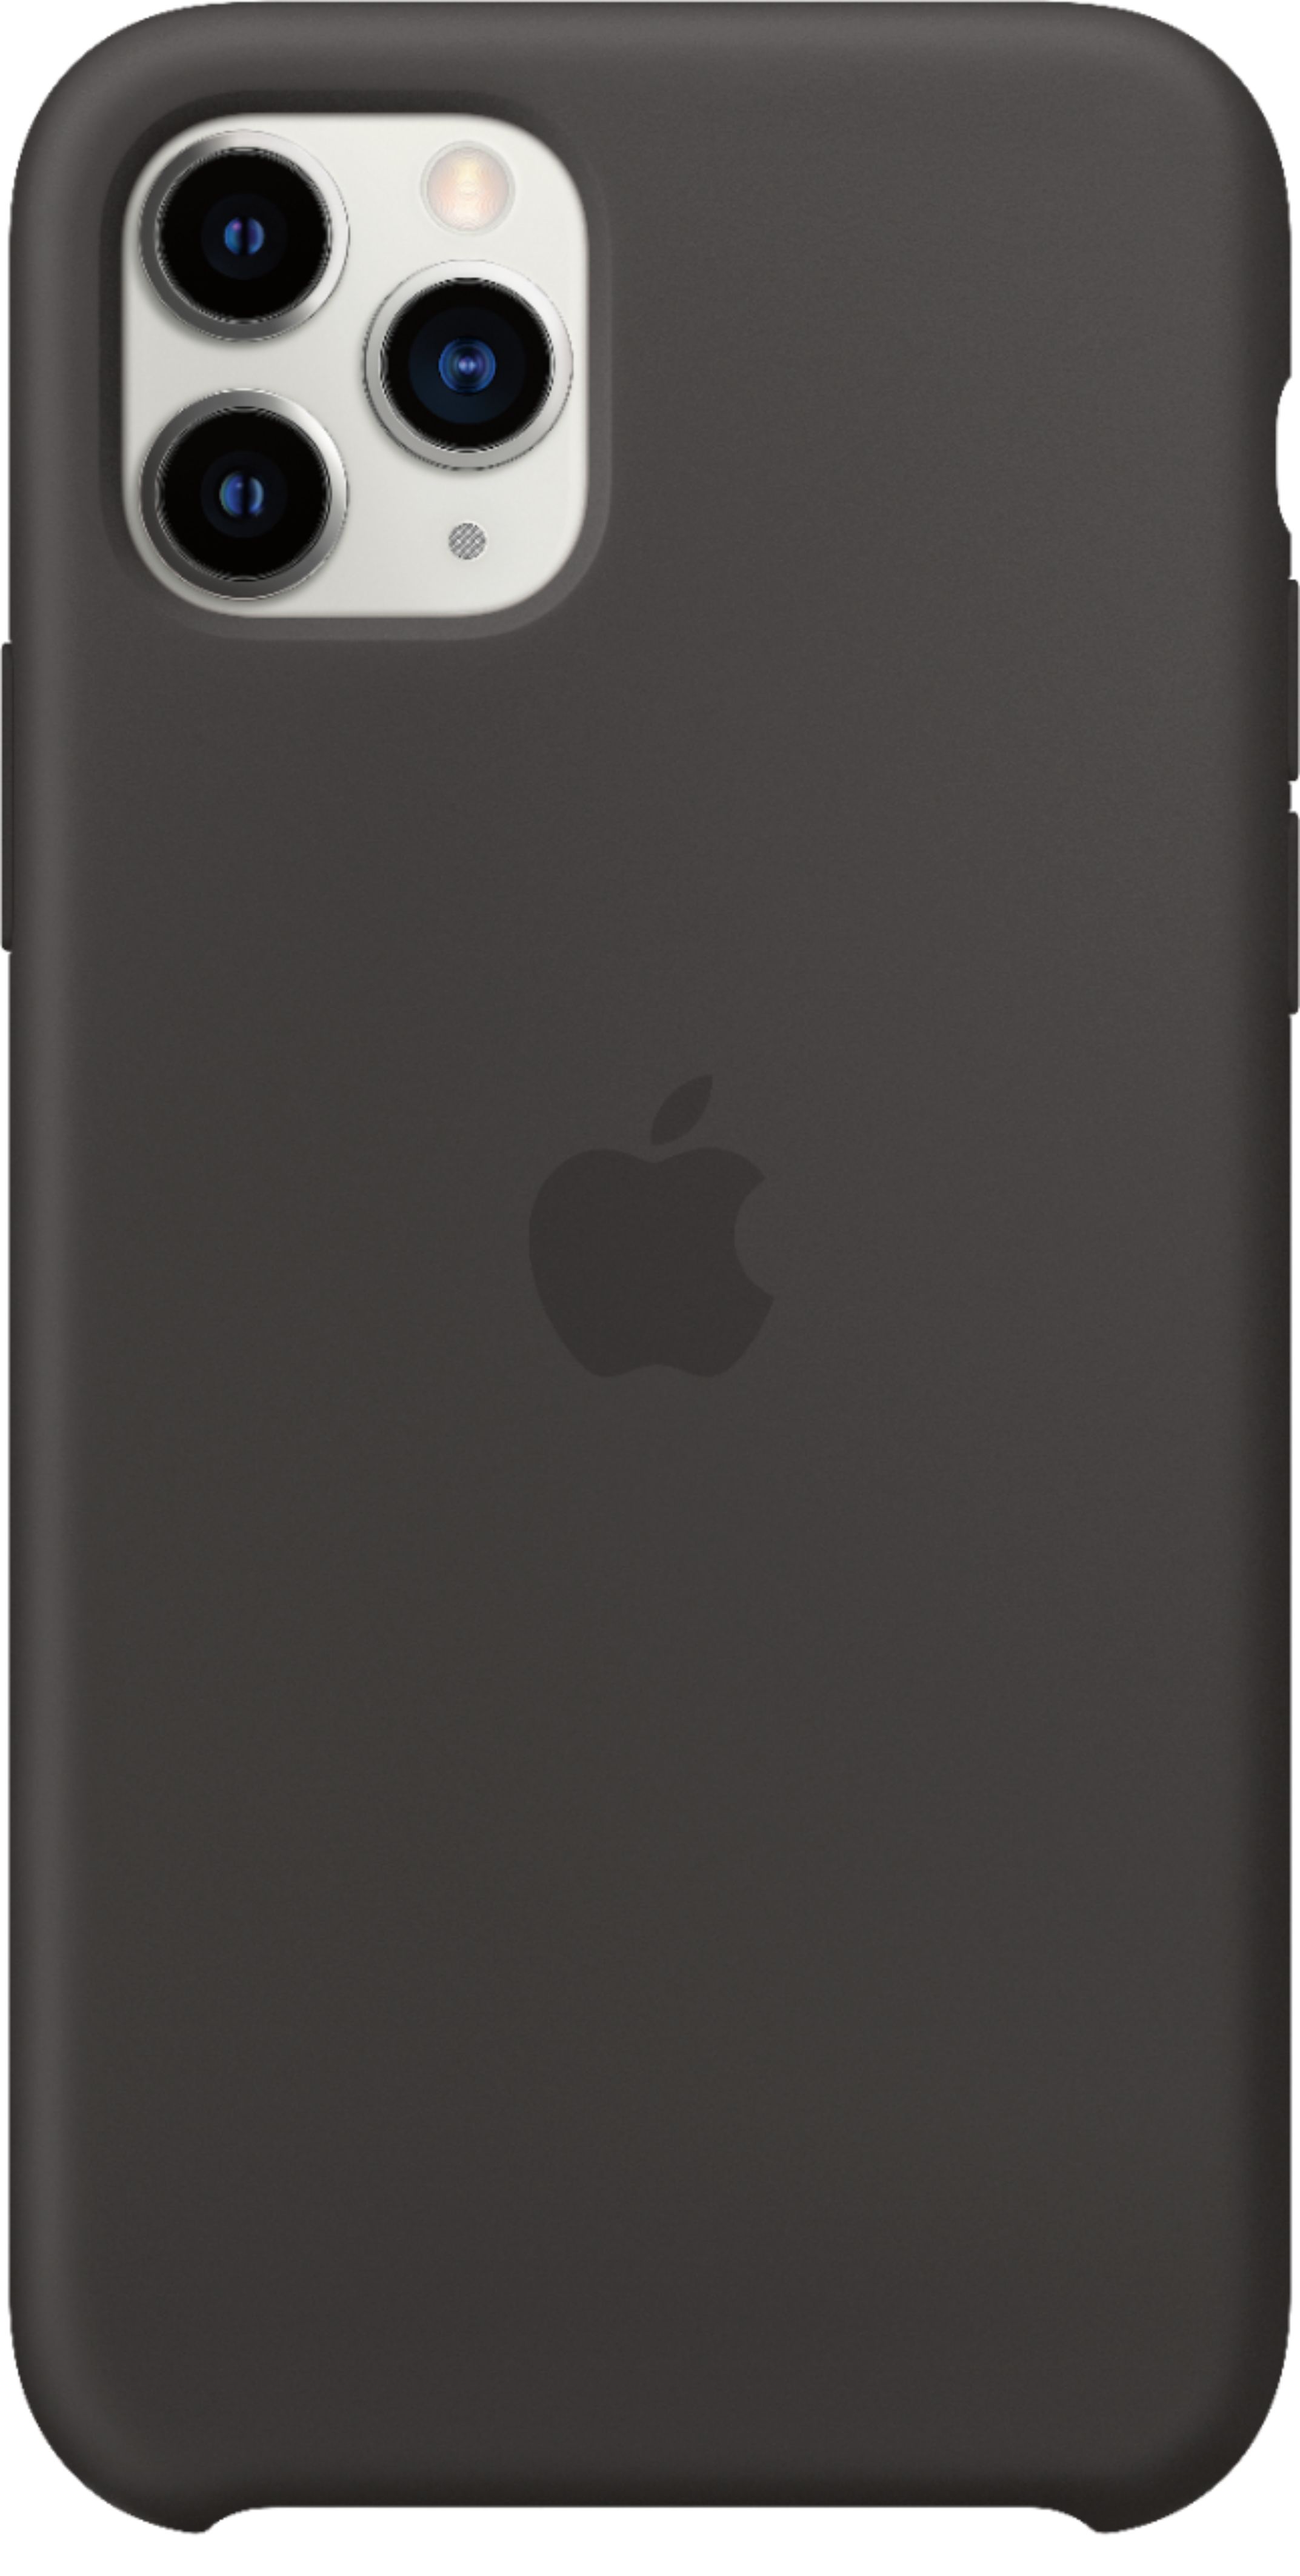 Apple Iphone 11 Pro Silicone Case Black Mwyn2zm A Best Buy